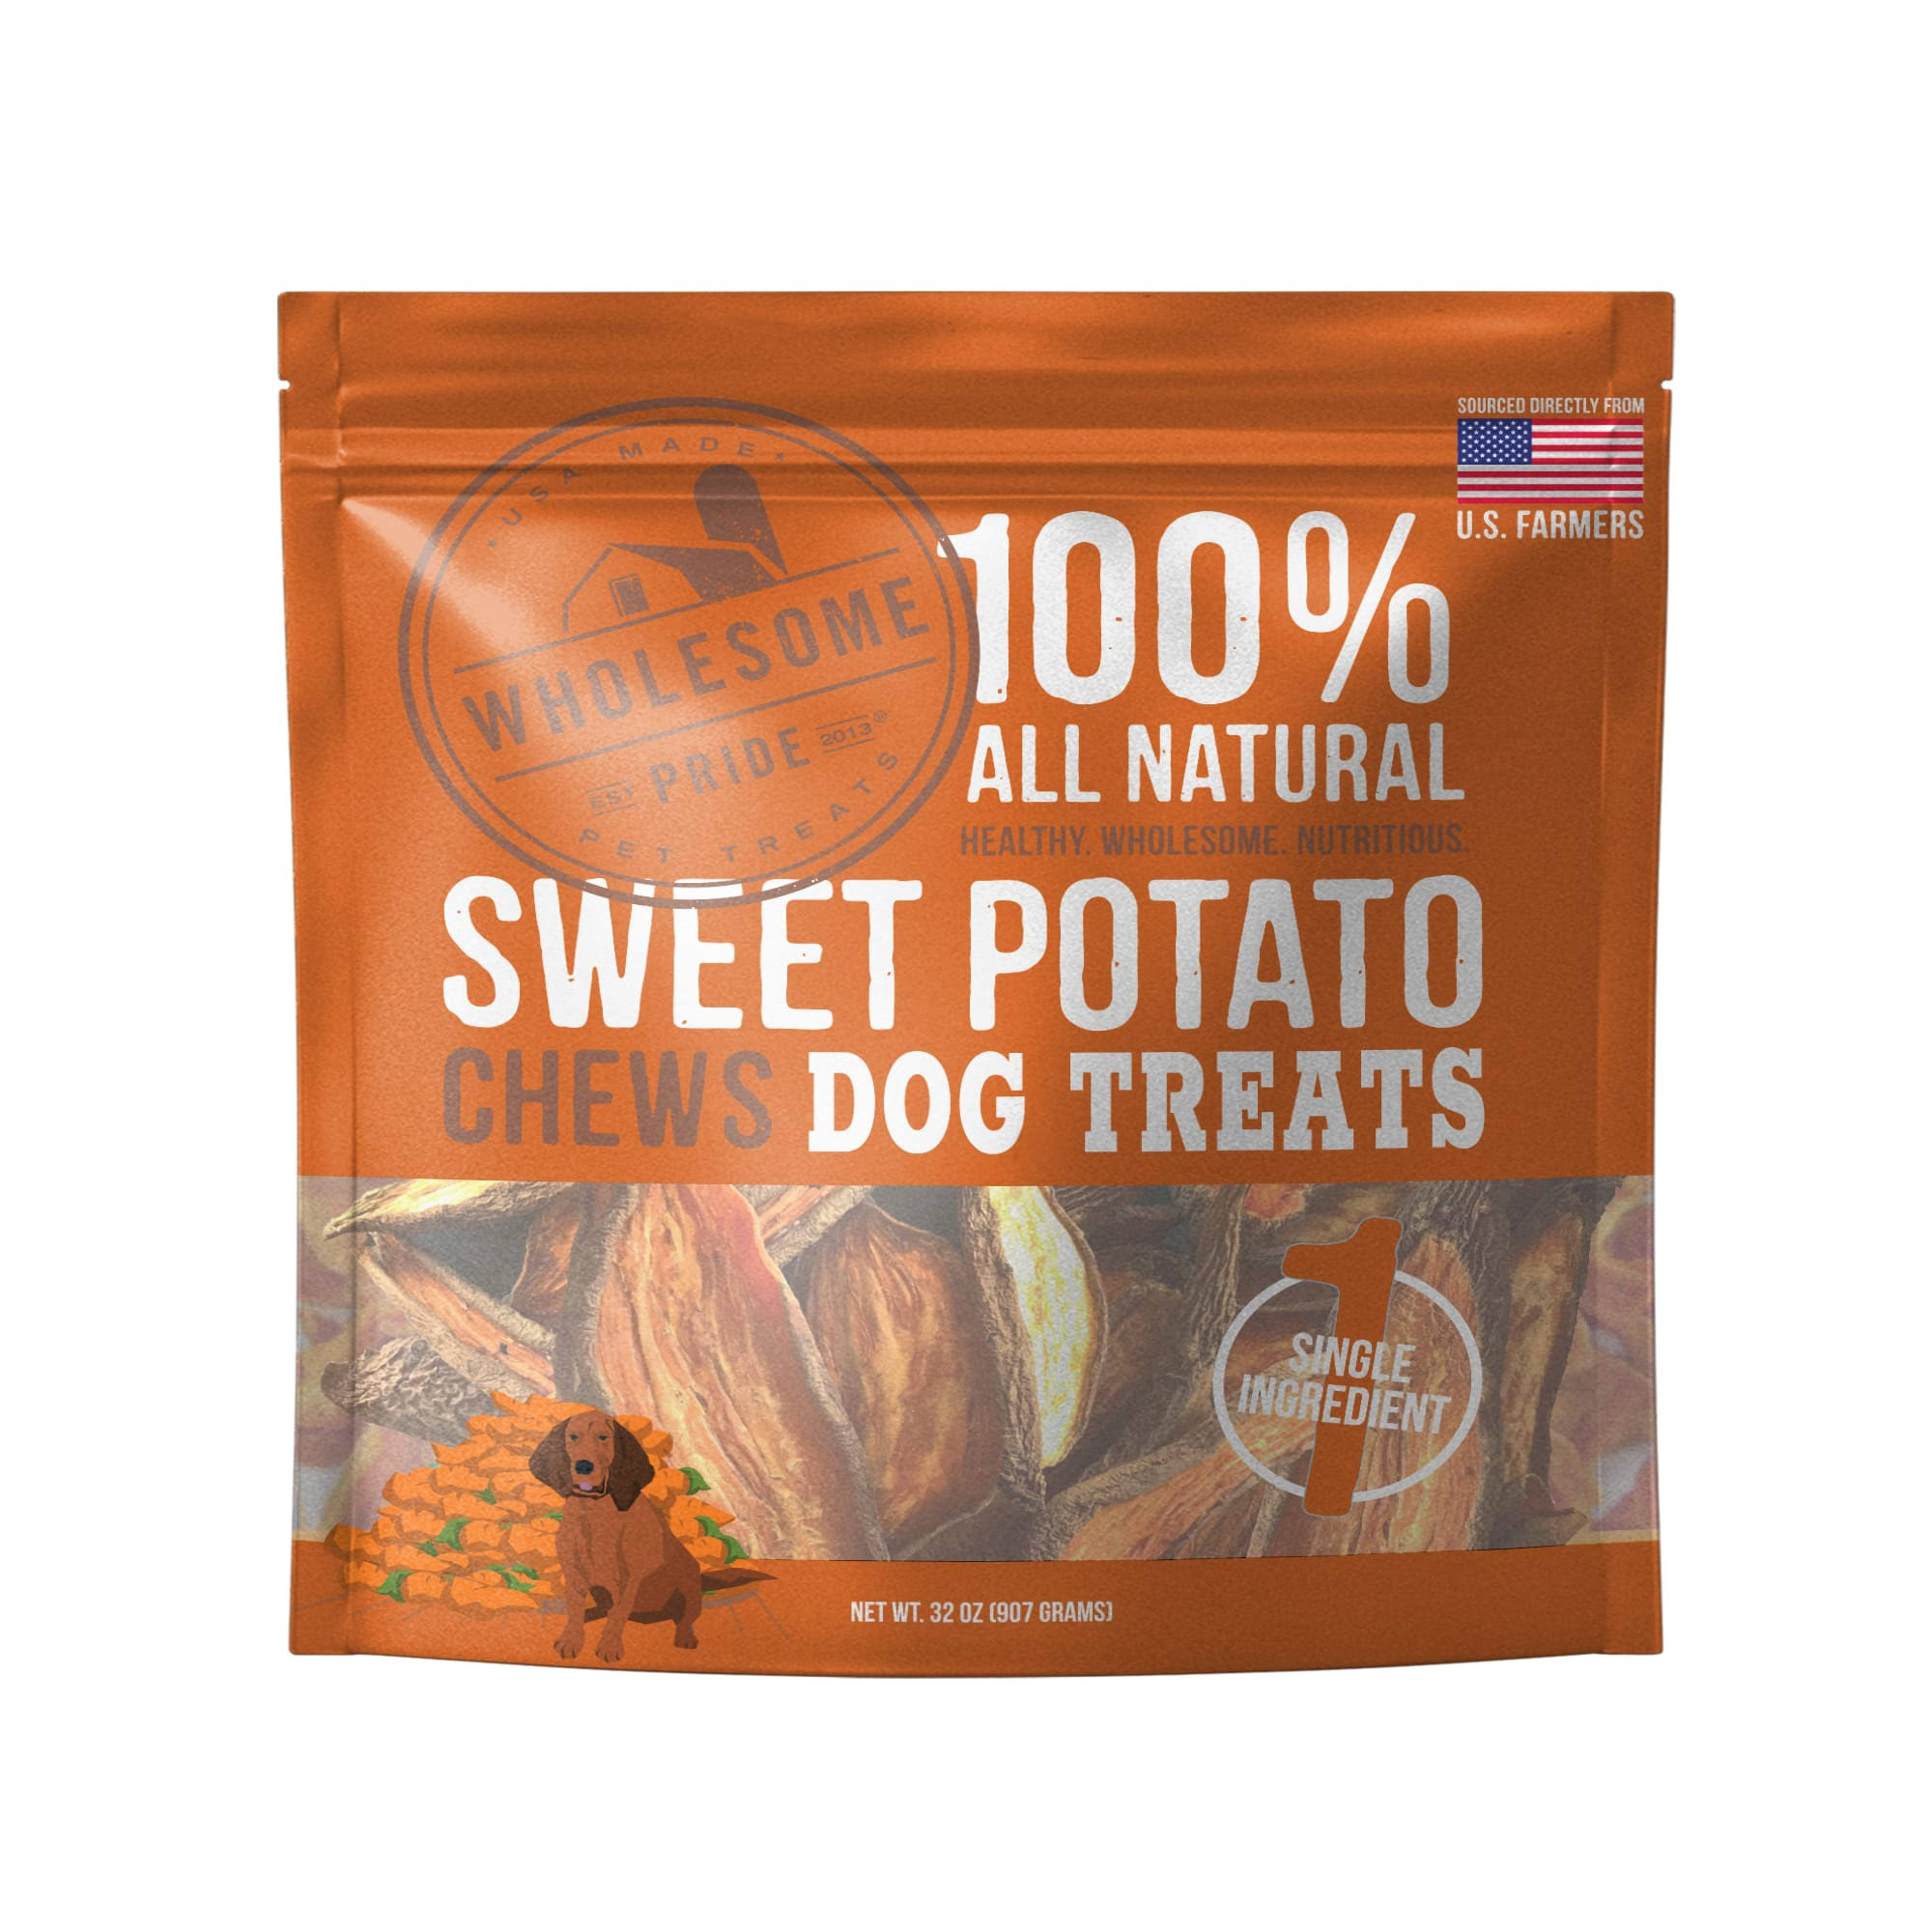 Wholesome Pride Chews Dog Treats - Sweet Potato - 32 oz Bag